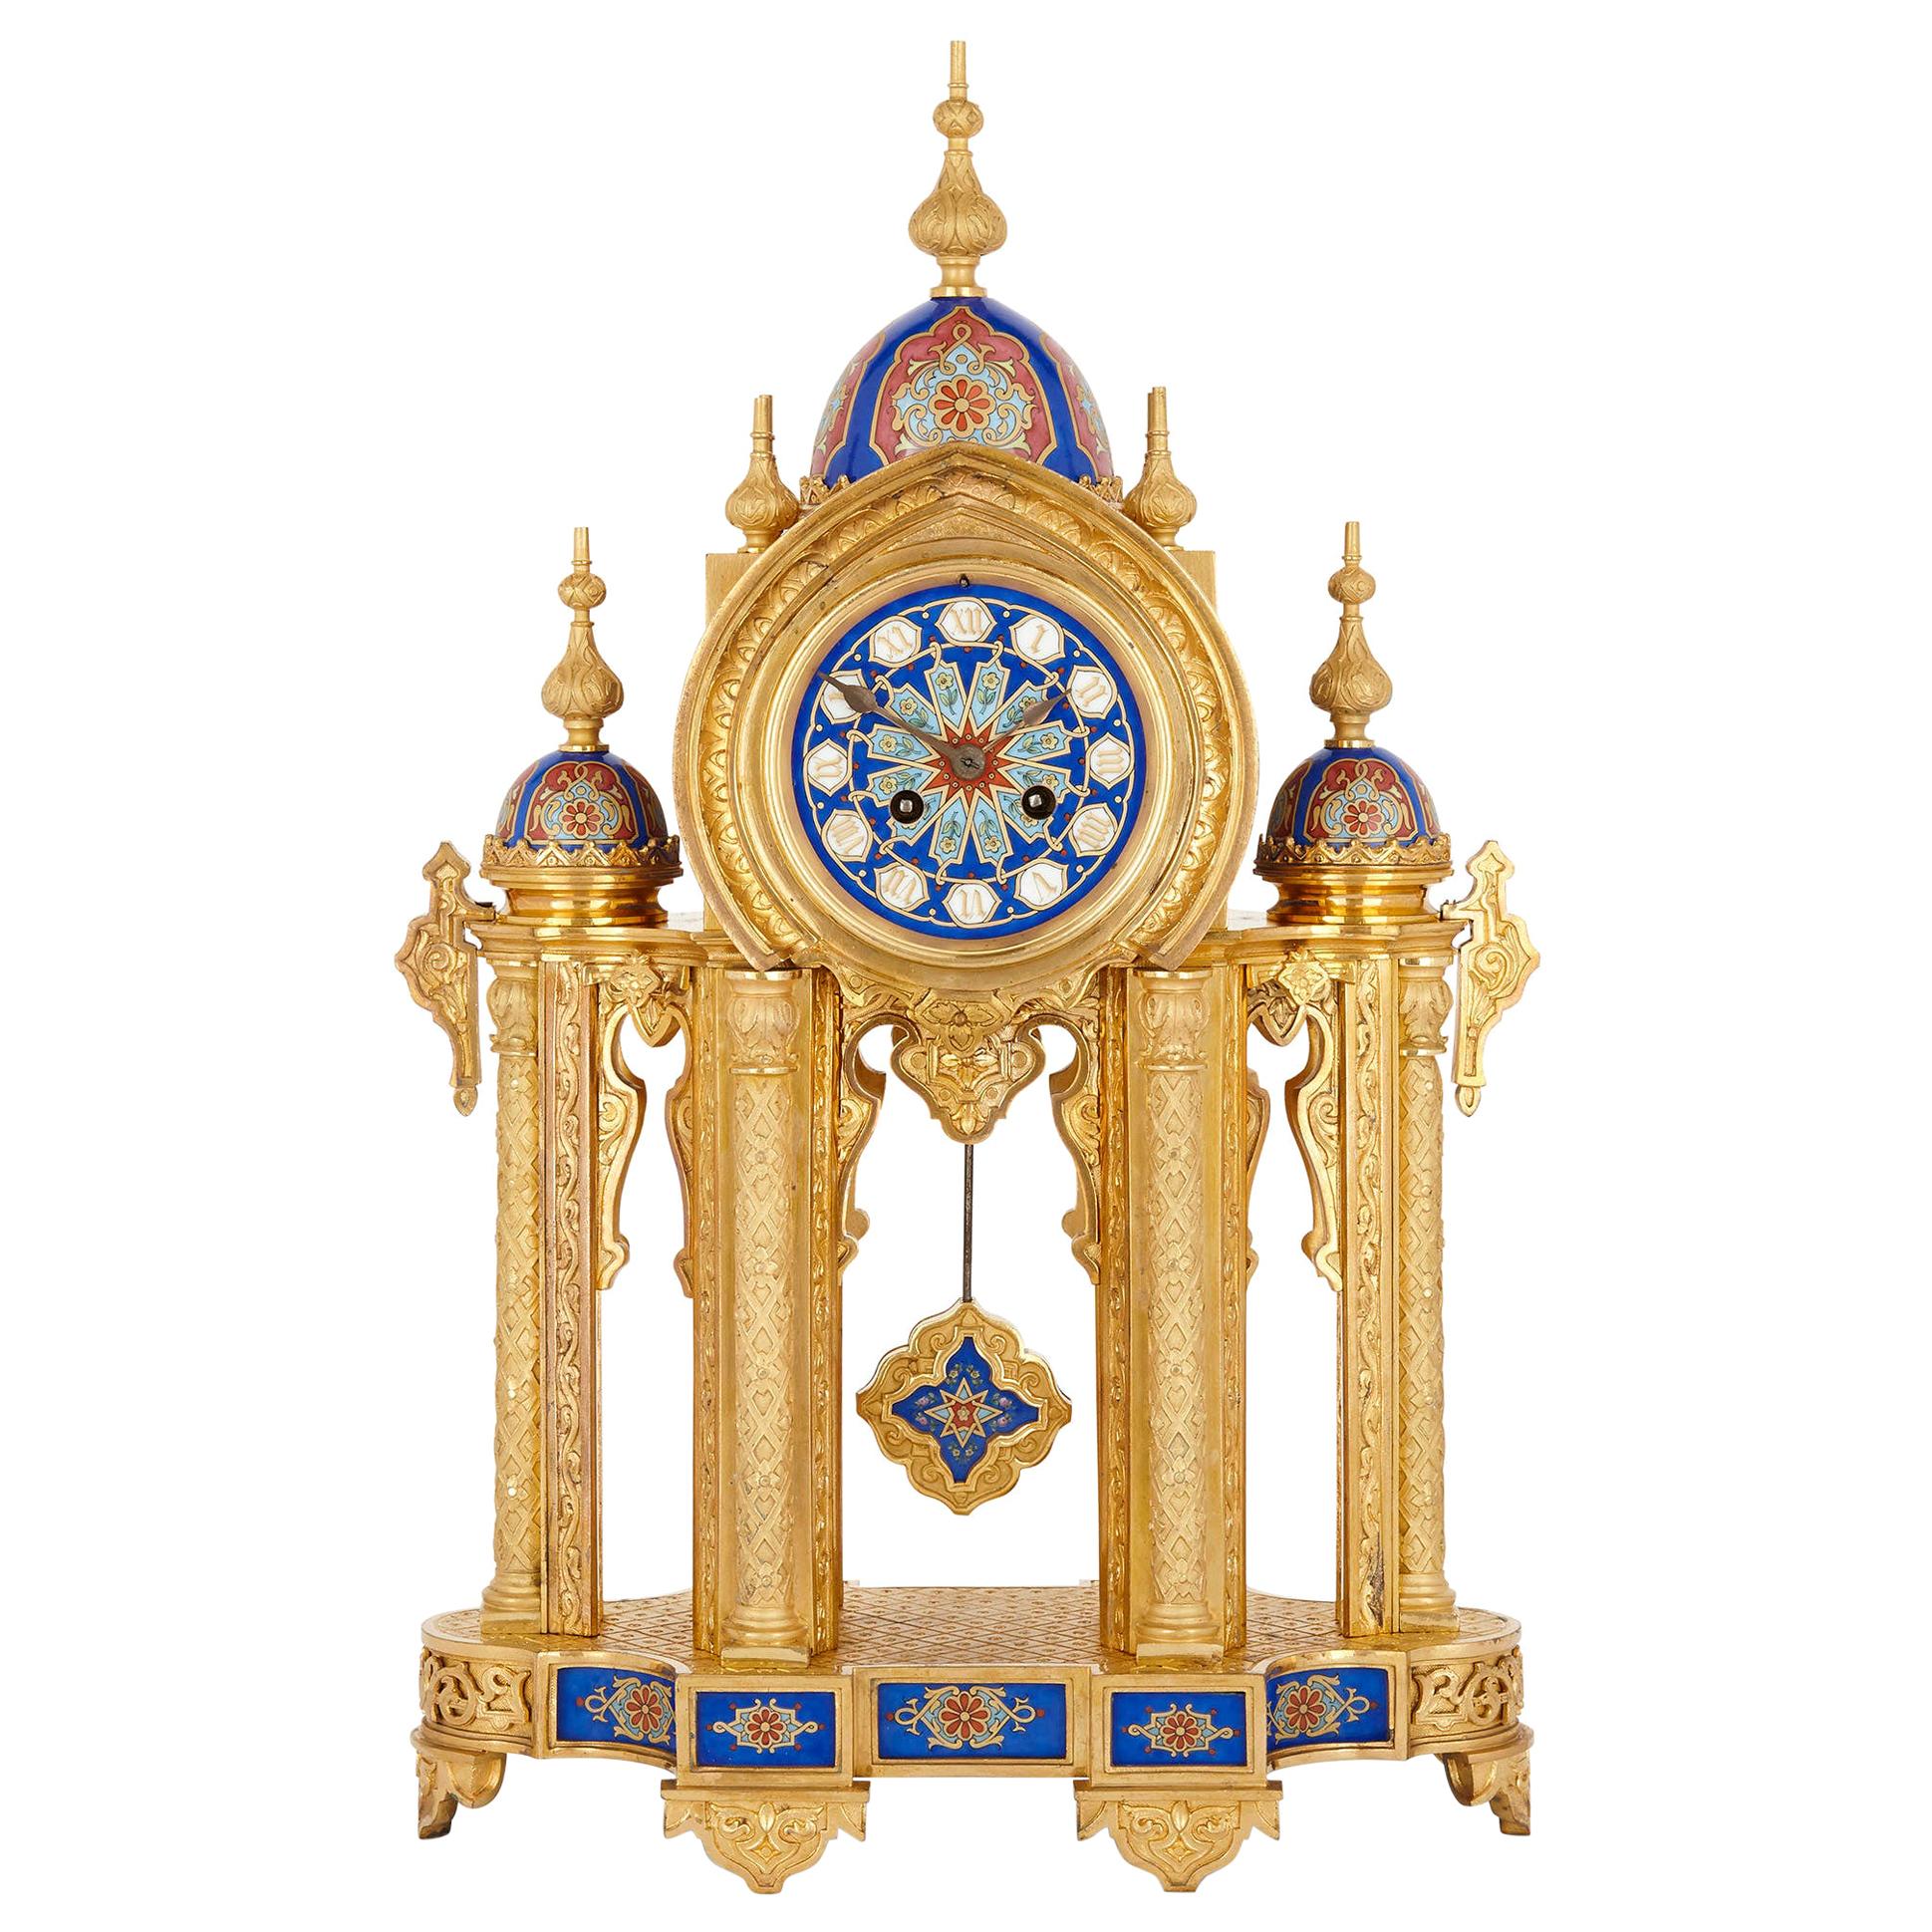 Belle Époque Period Ormolu and Porcelain Mantel Clock in Moorish Style